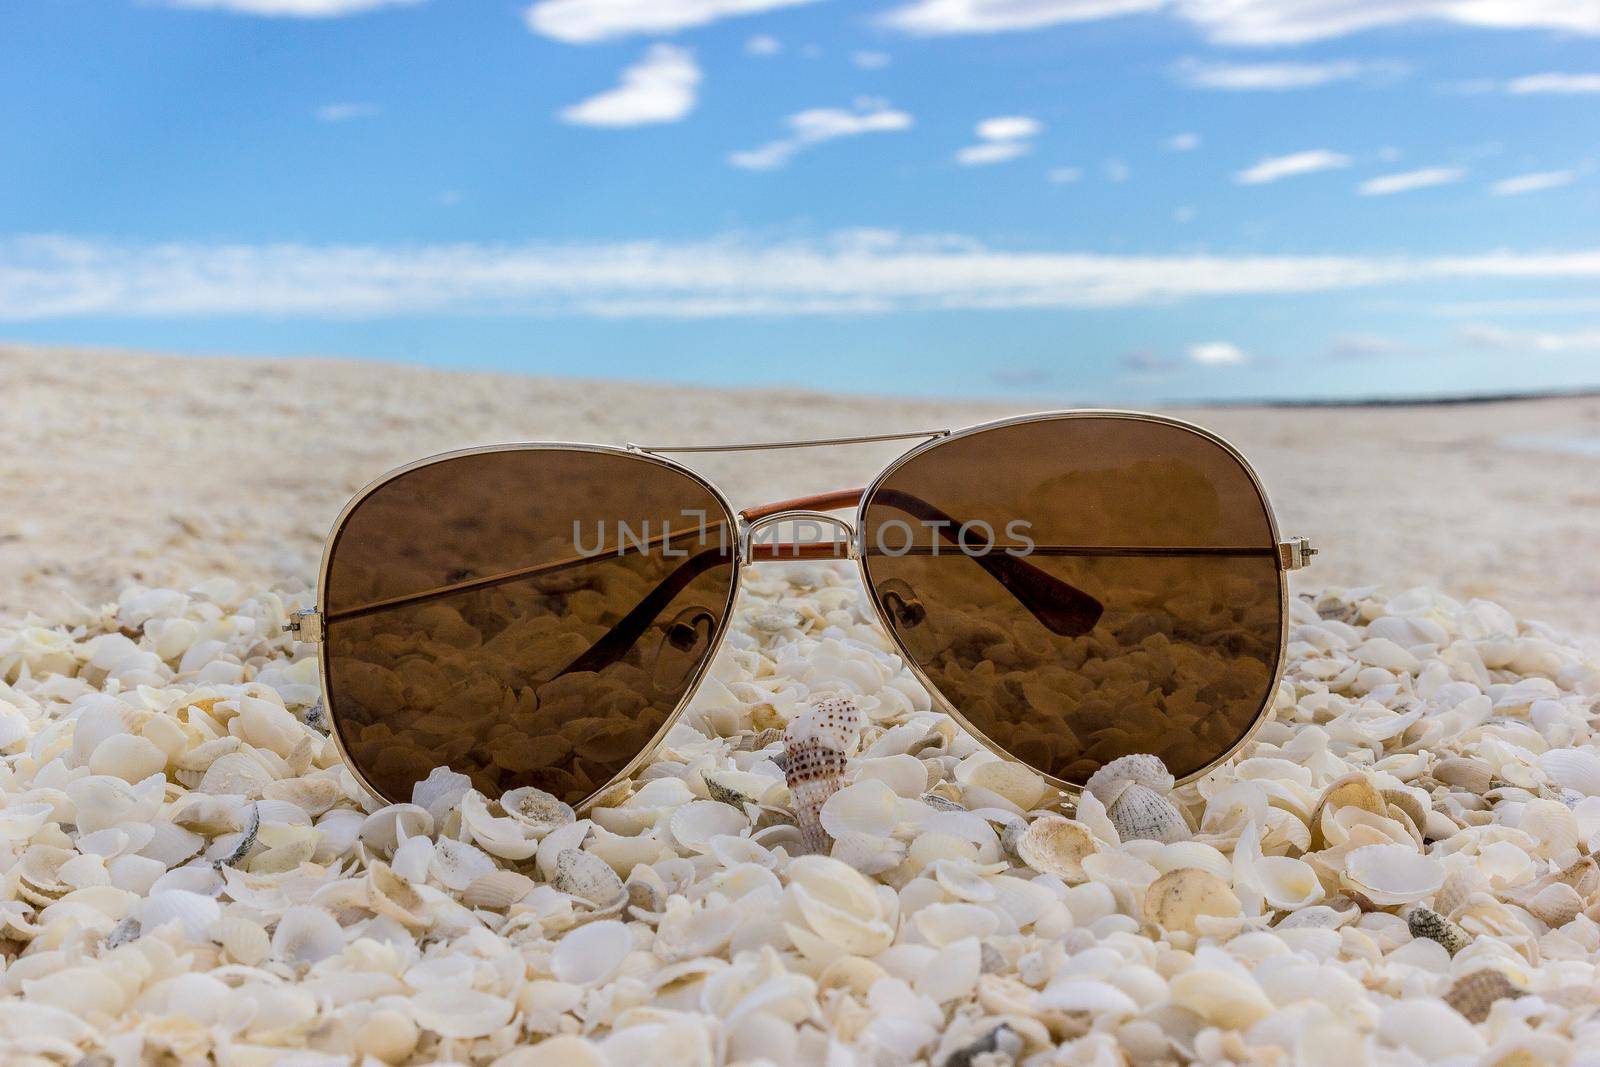 Sunglasses at a beach full of shells, SharkBay, Western Australia